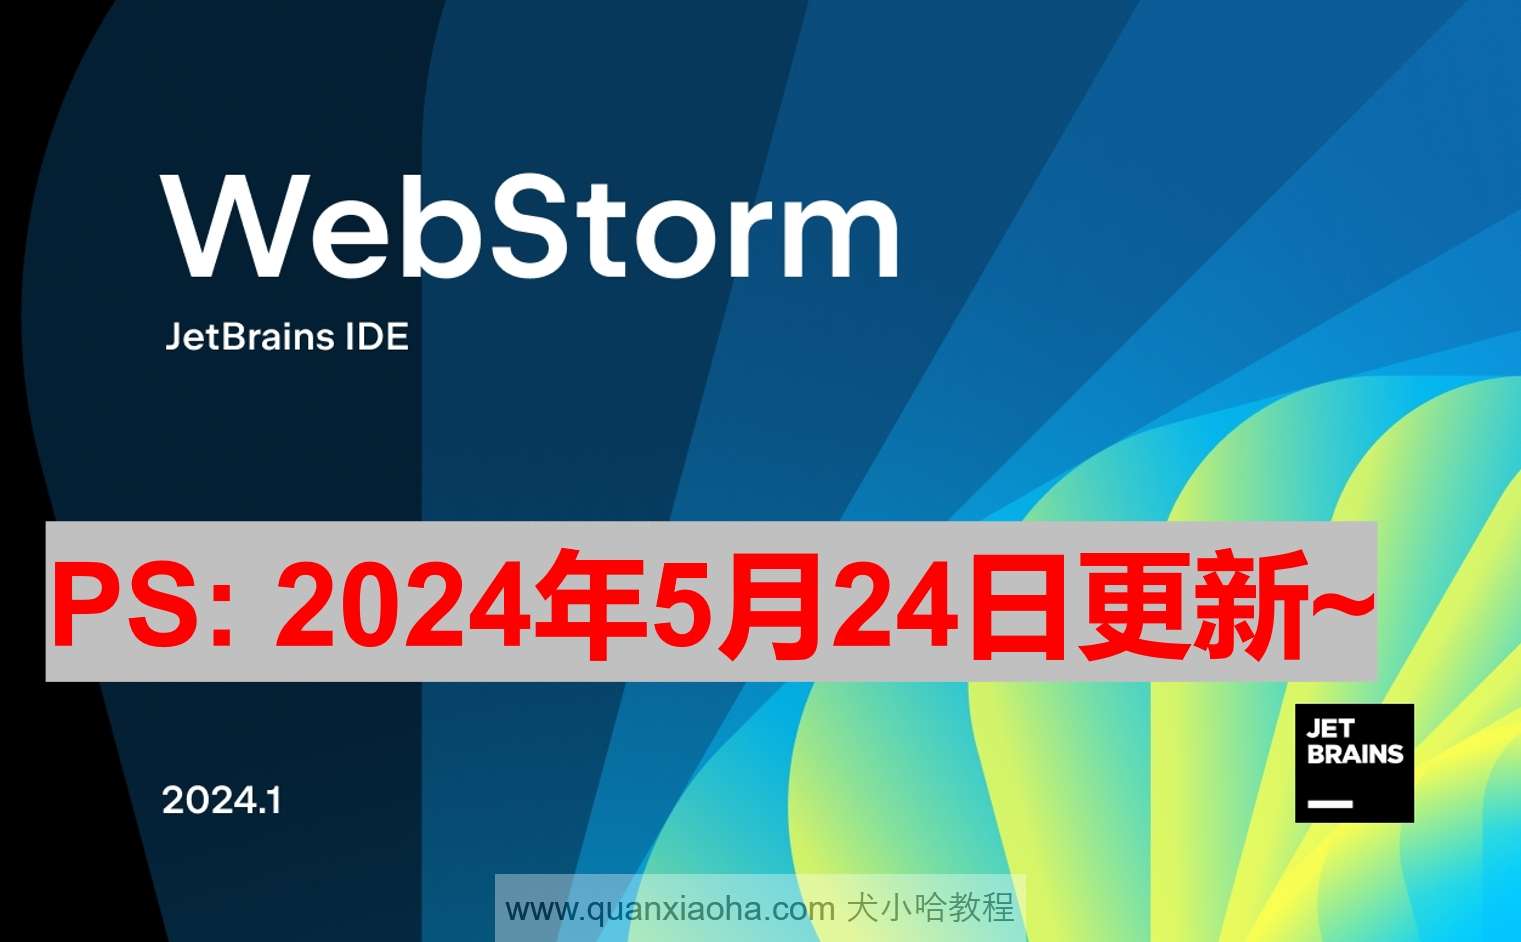 Webstorm 2024.1.3 版本启动界面